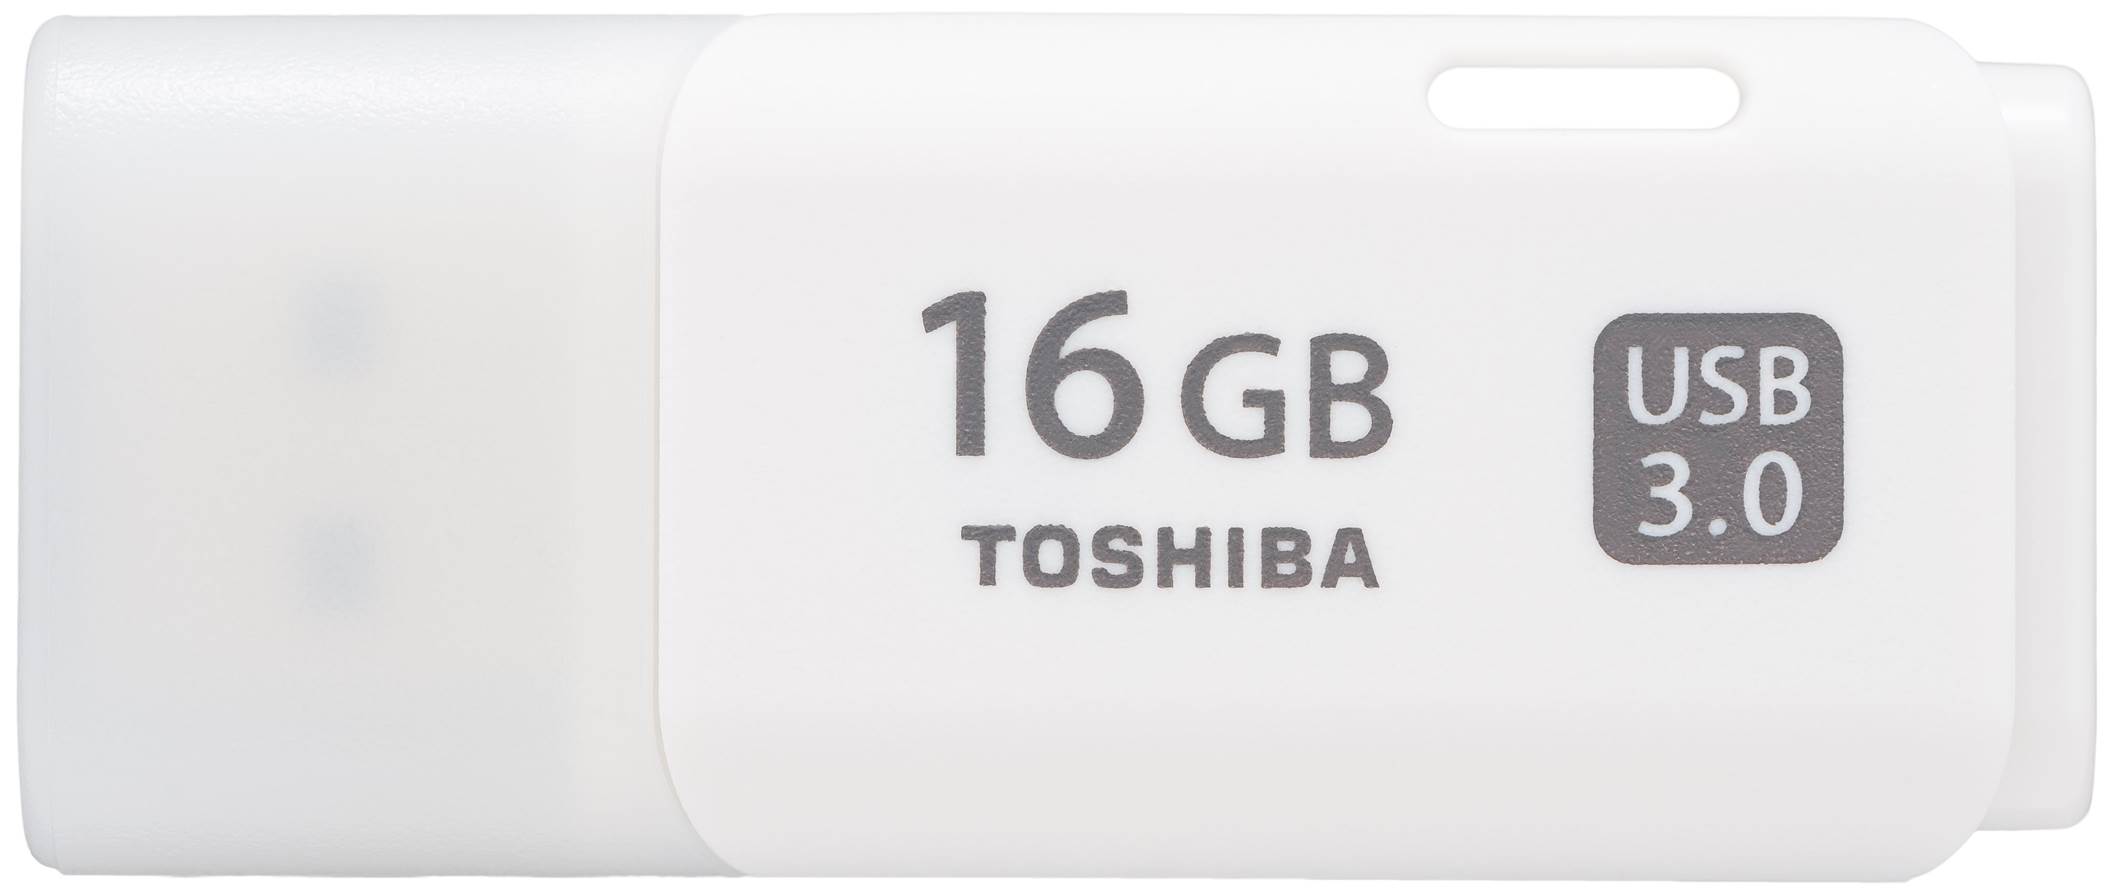 USB FD TOSHIBA HAYABUSA 16 GB USB 3.0 в Киеве